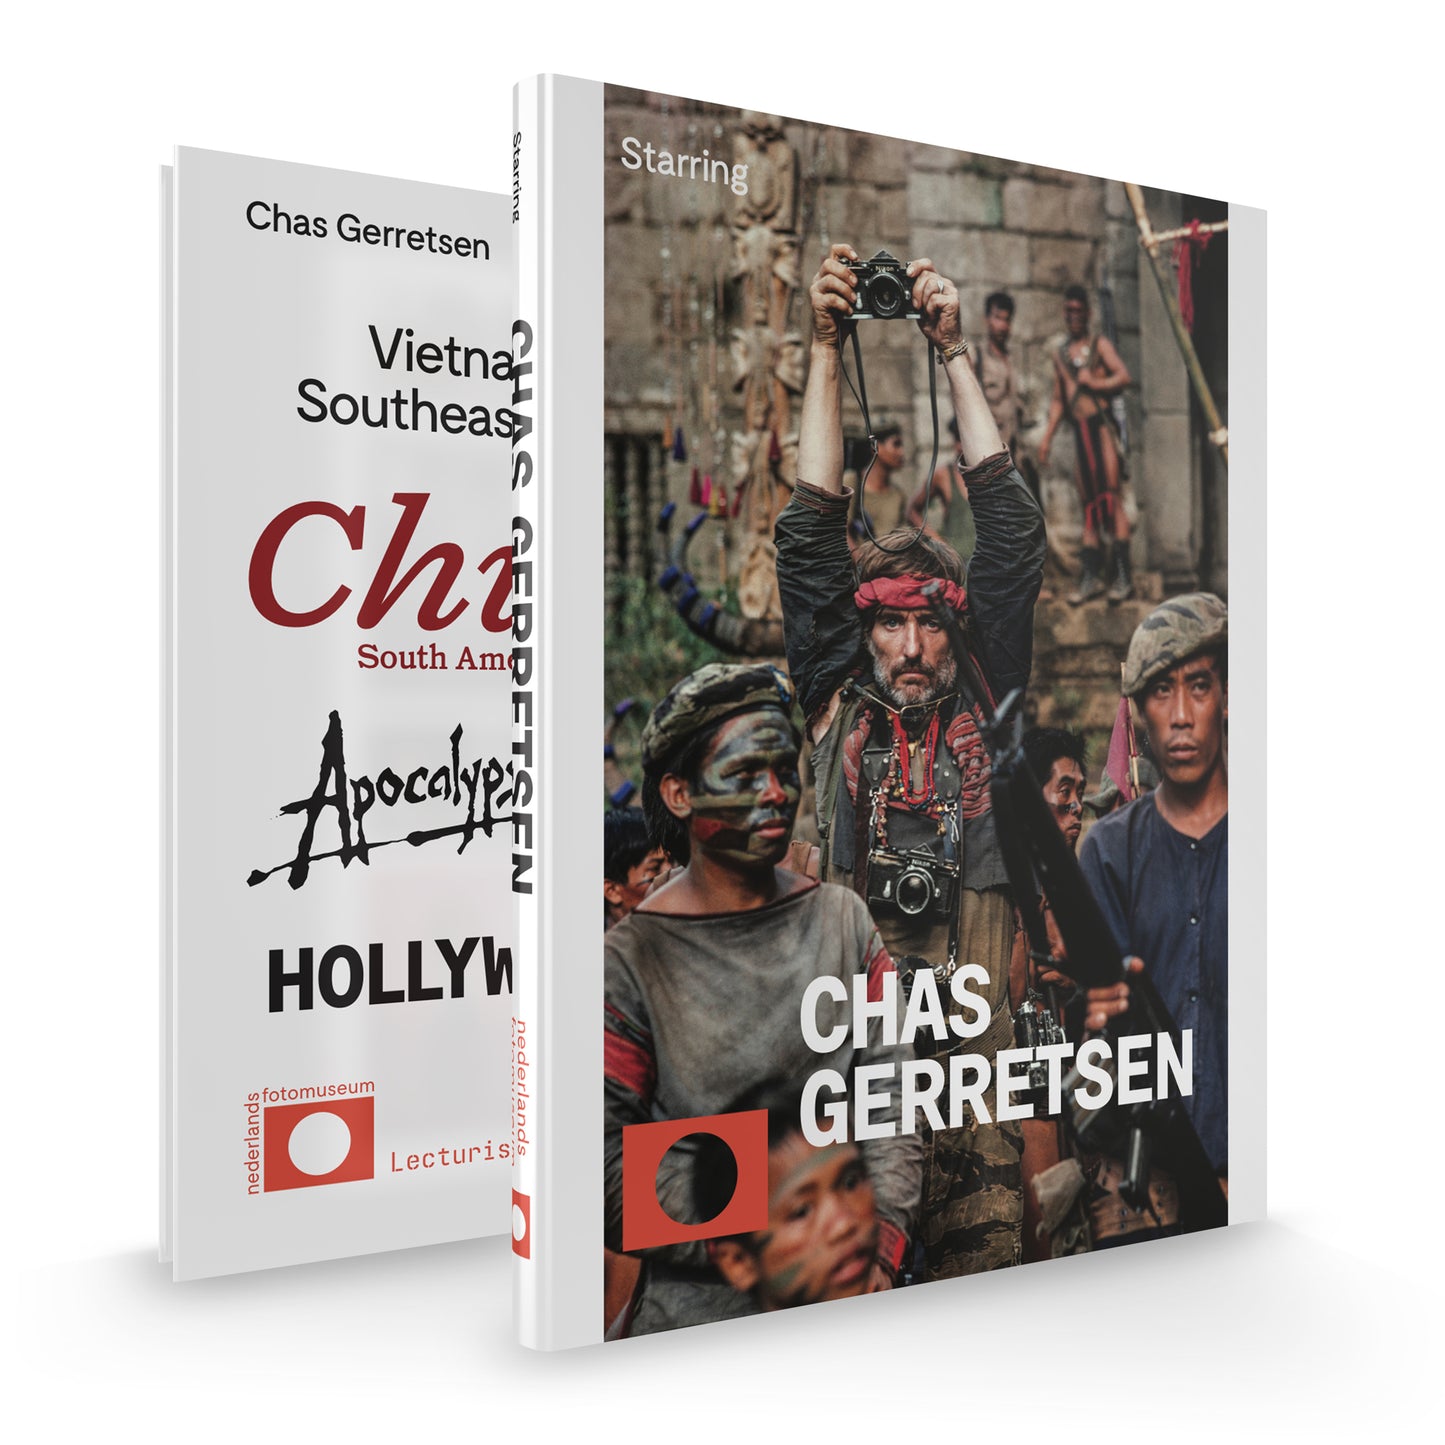 Starring Chas Gerretsen | Iris Sikking (English version)